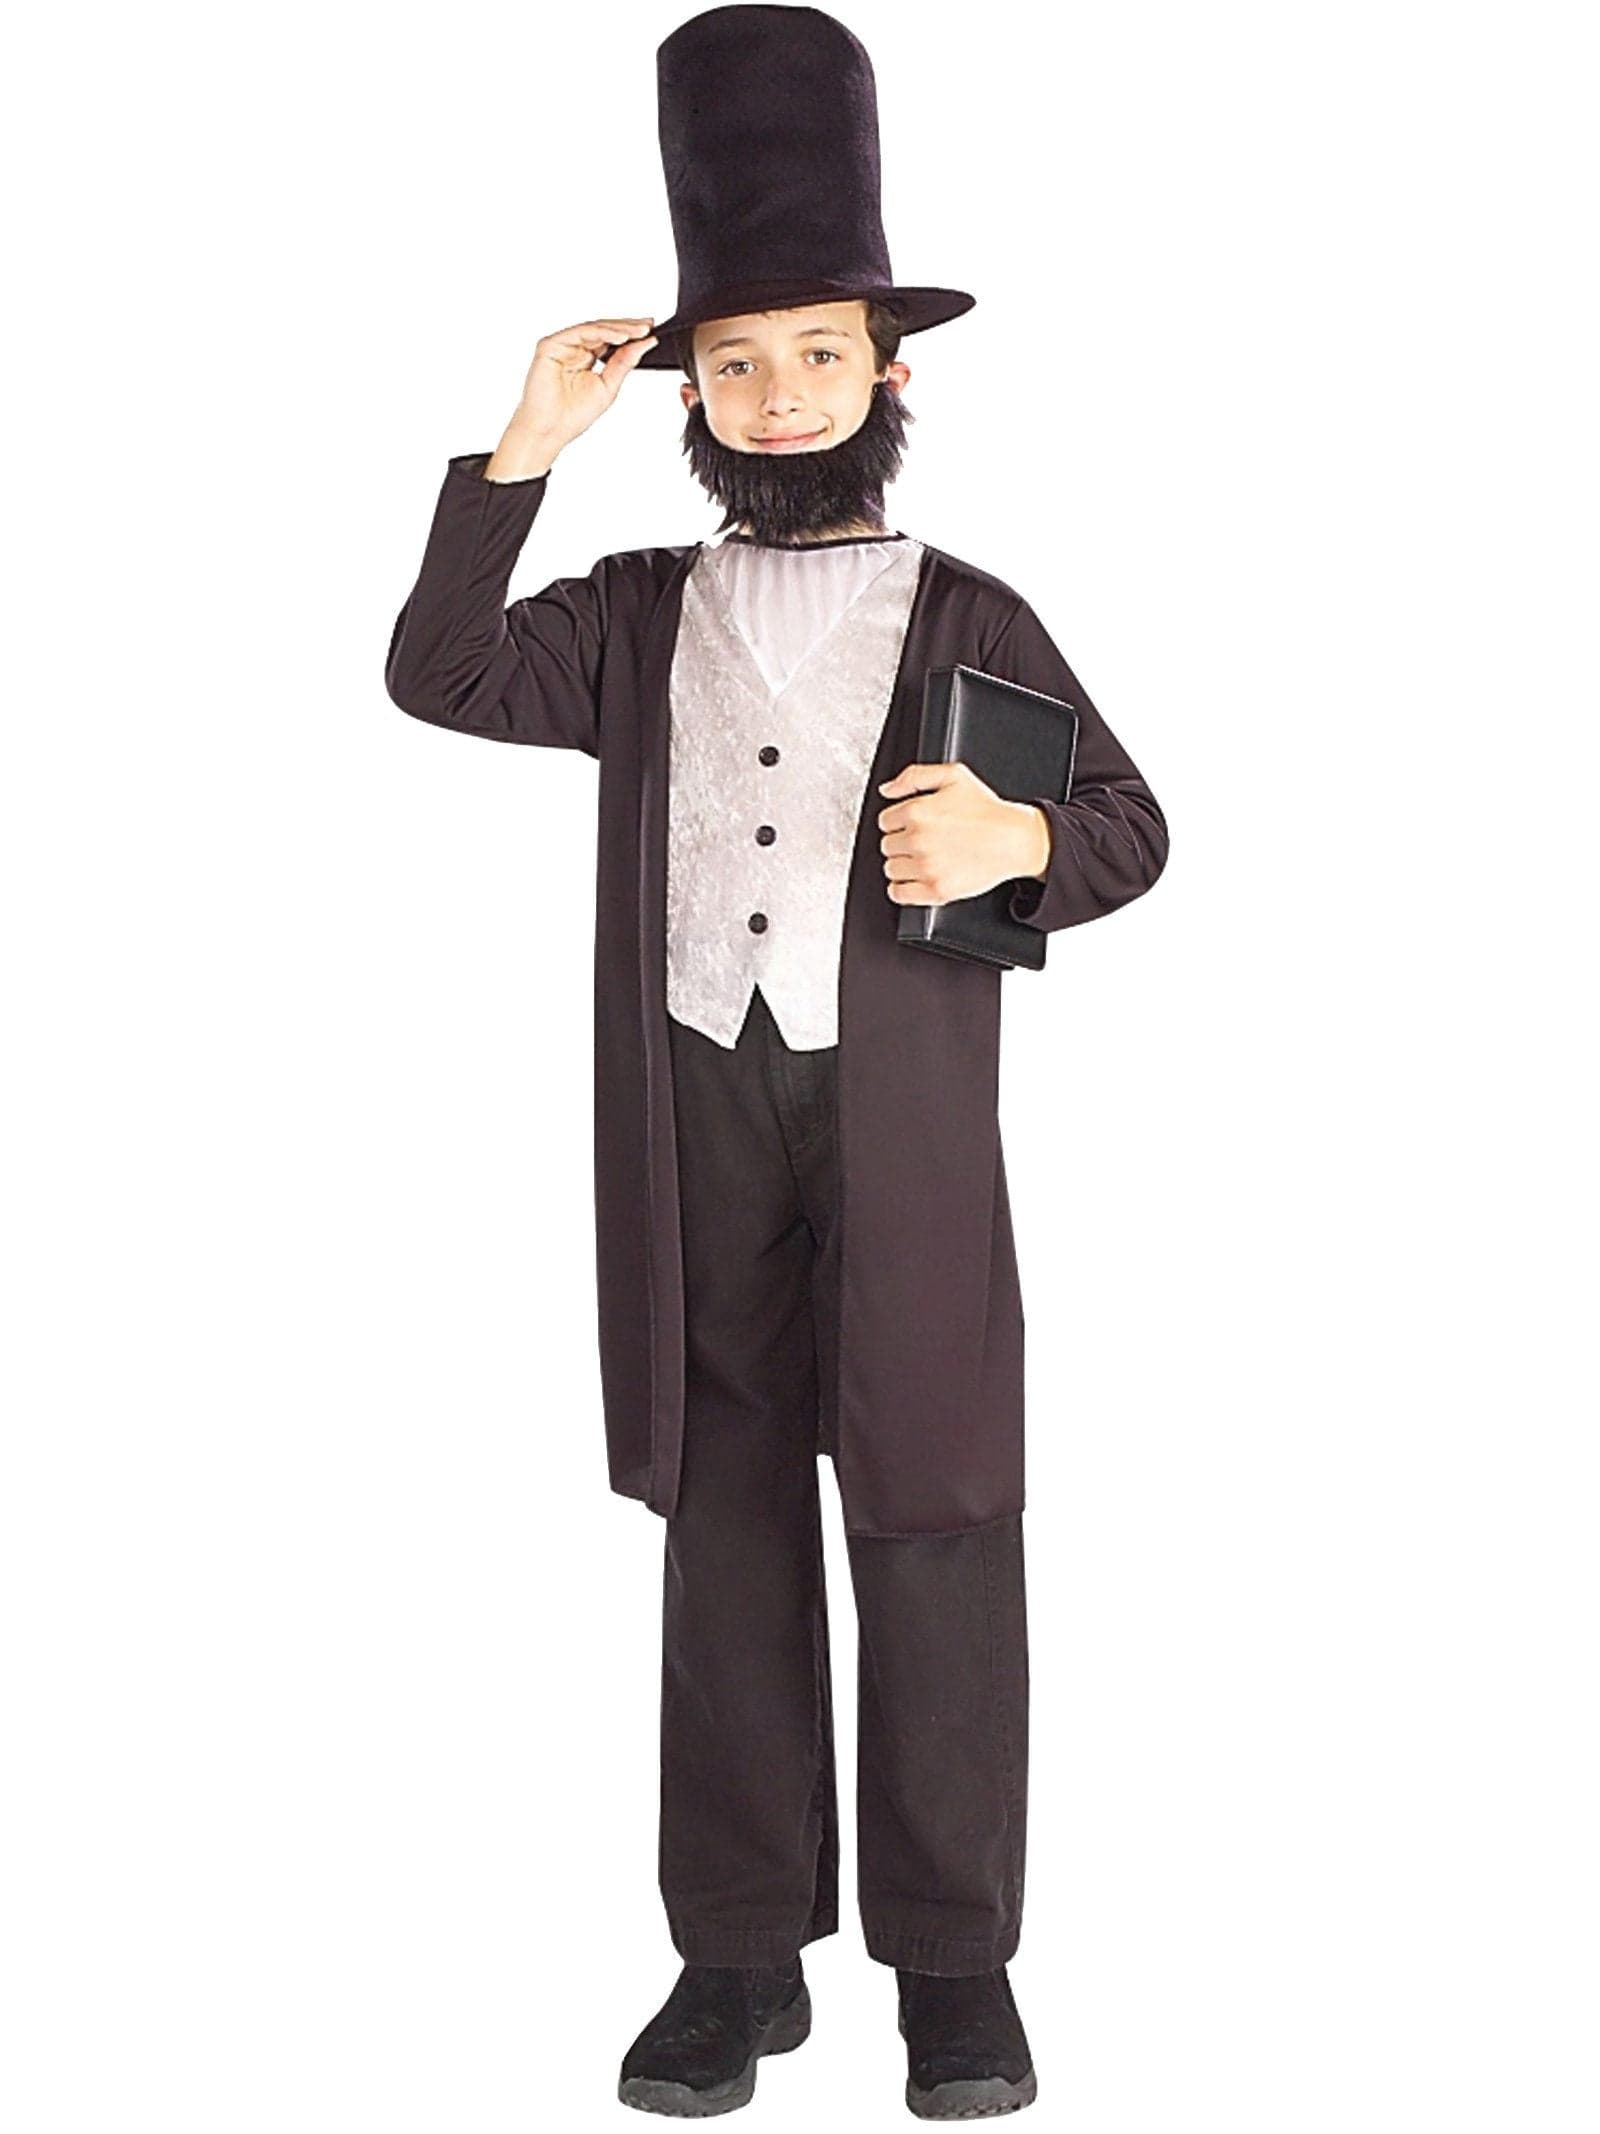 Kid's Abraham Lincoln 46 Costume - costumes.com